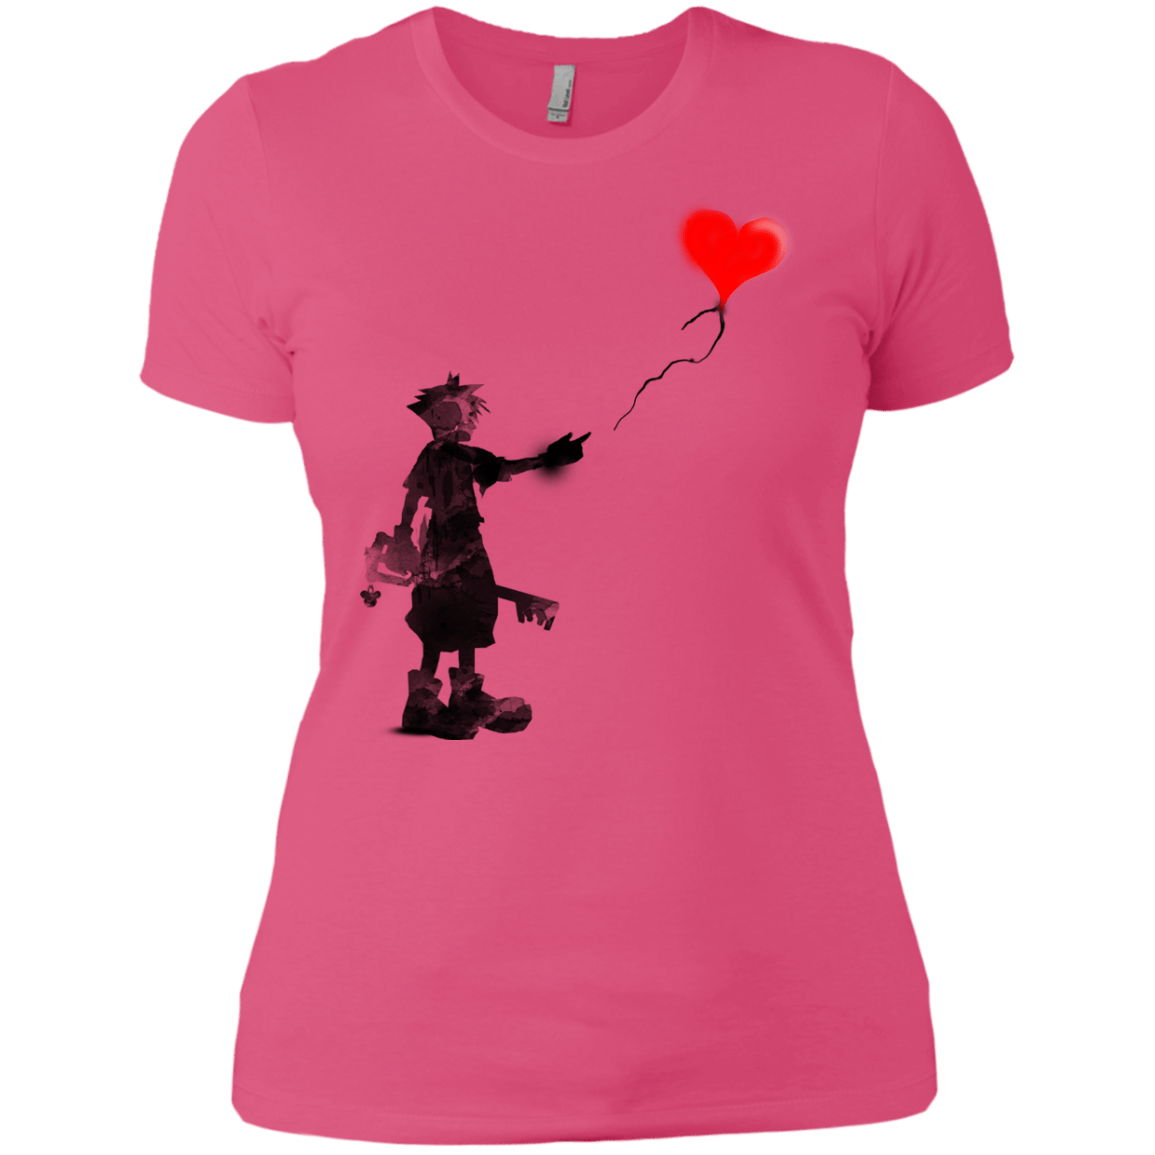 T-Shirts Hot Pink / X-Small Boy and Balloon Women's Premium T-Shirt